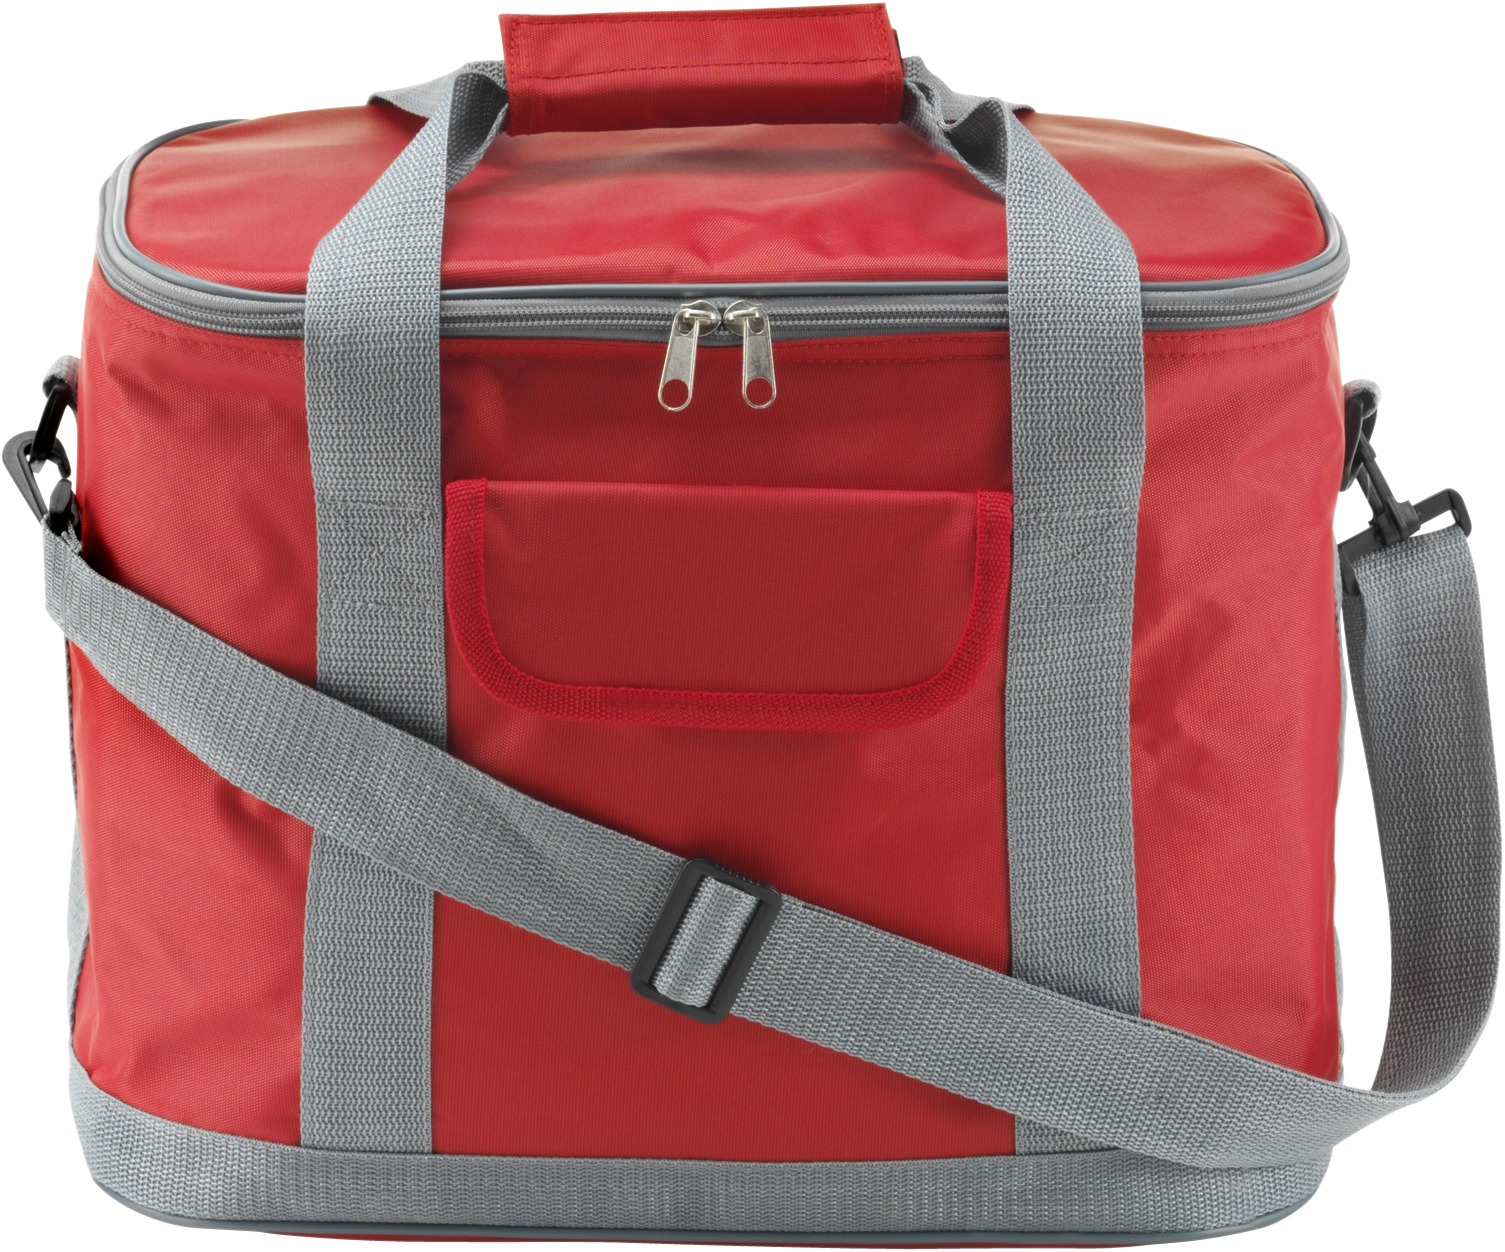 Picnic Cooler Bag  in red